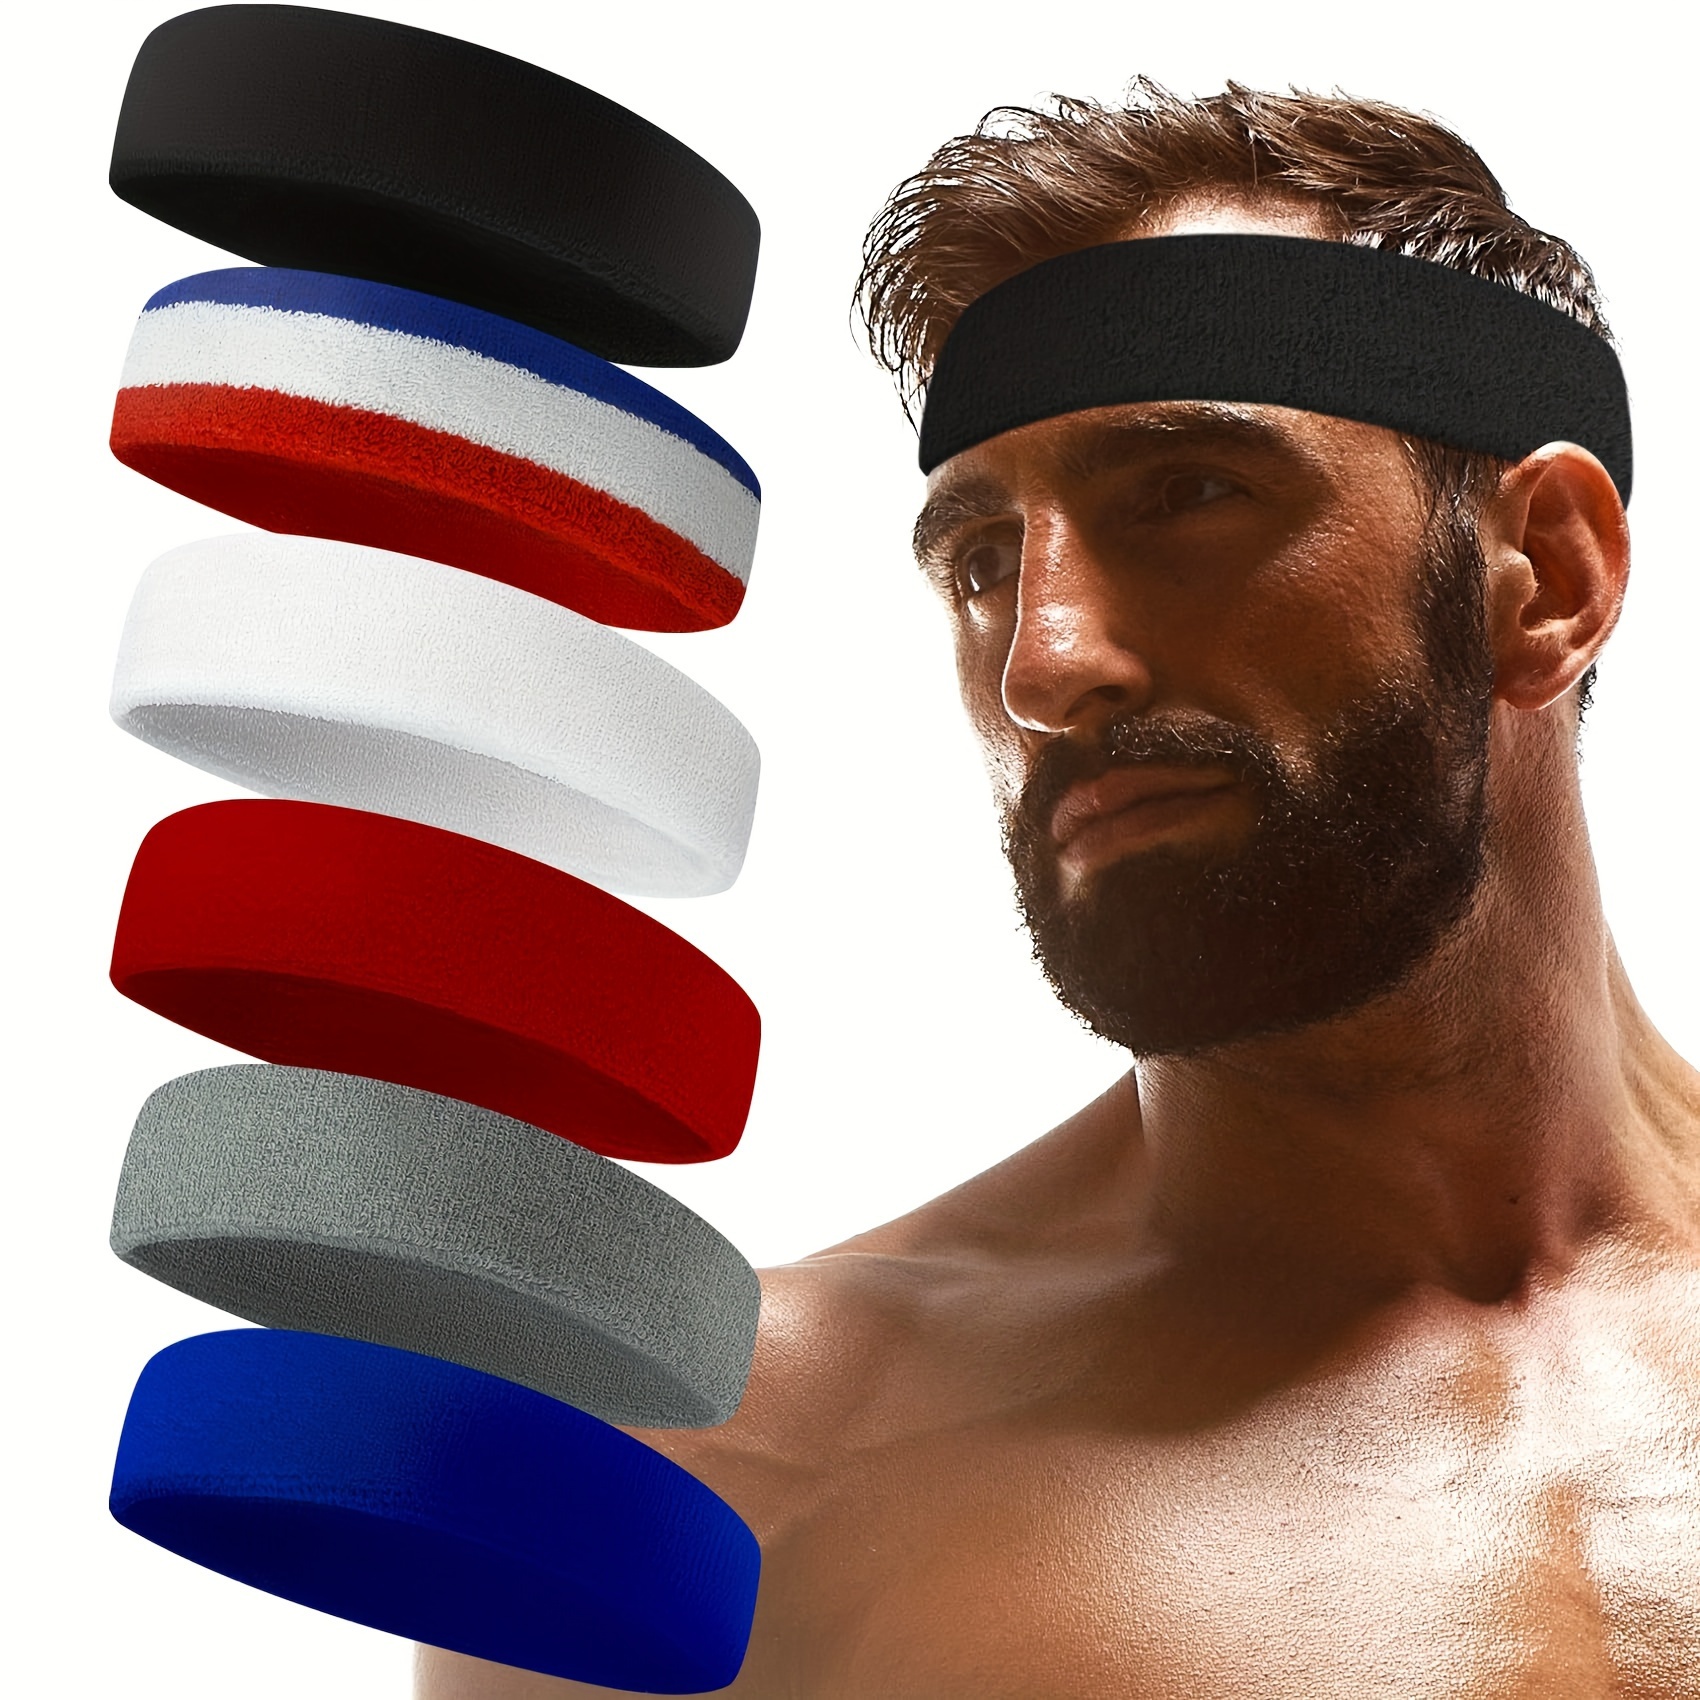 

6 Pcs/set Retro Sports Headband For Men & Women - Terry Cloth Moisture-wicking Towel Headband For Tennis, Basketball, Running, Gym, Fitness